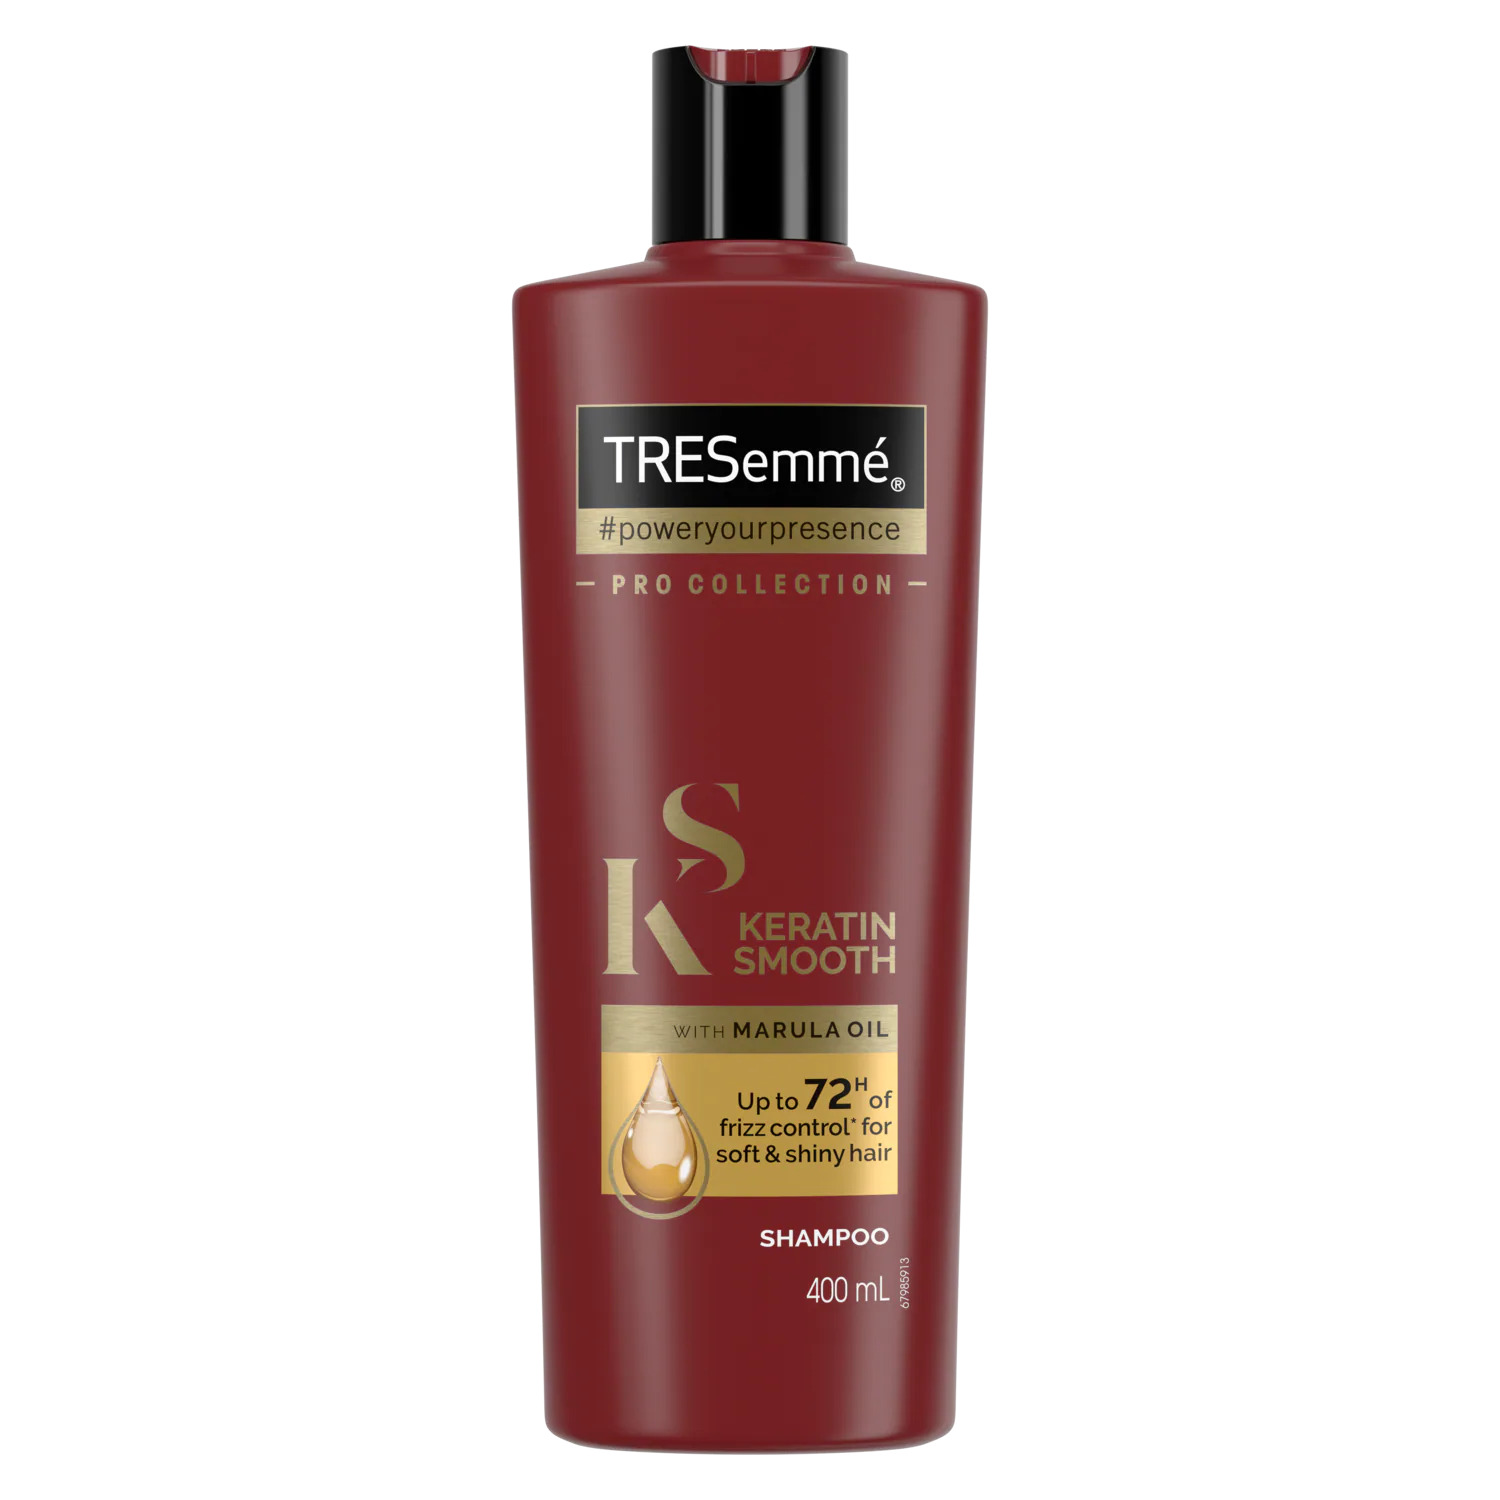 Shampoo brands in India - TRESemmé